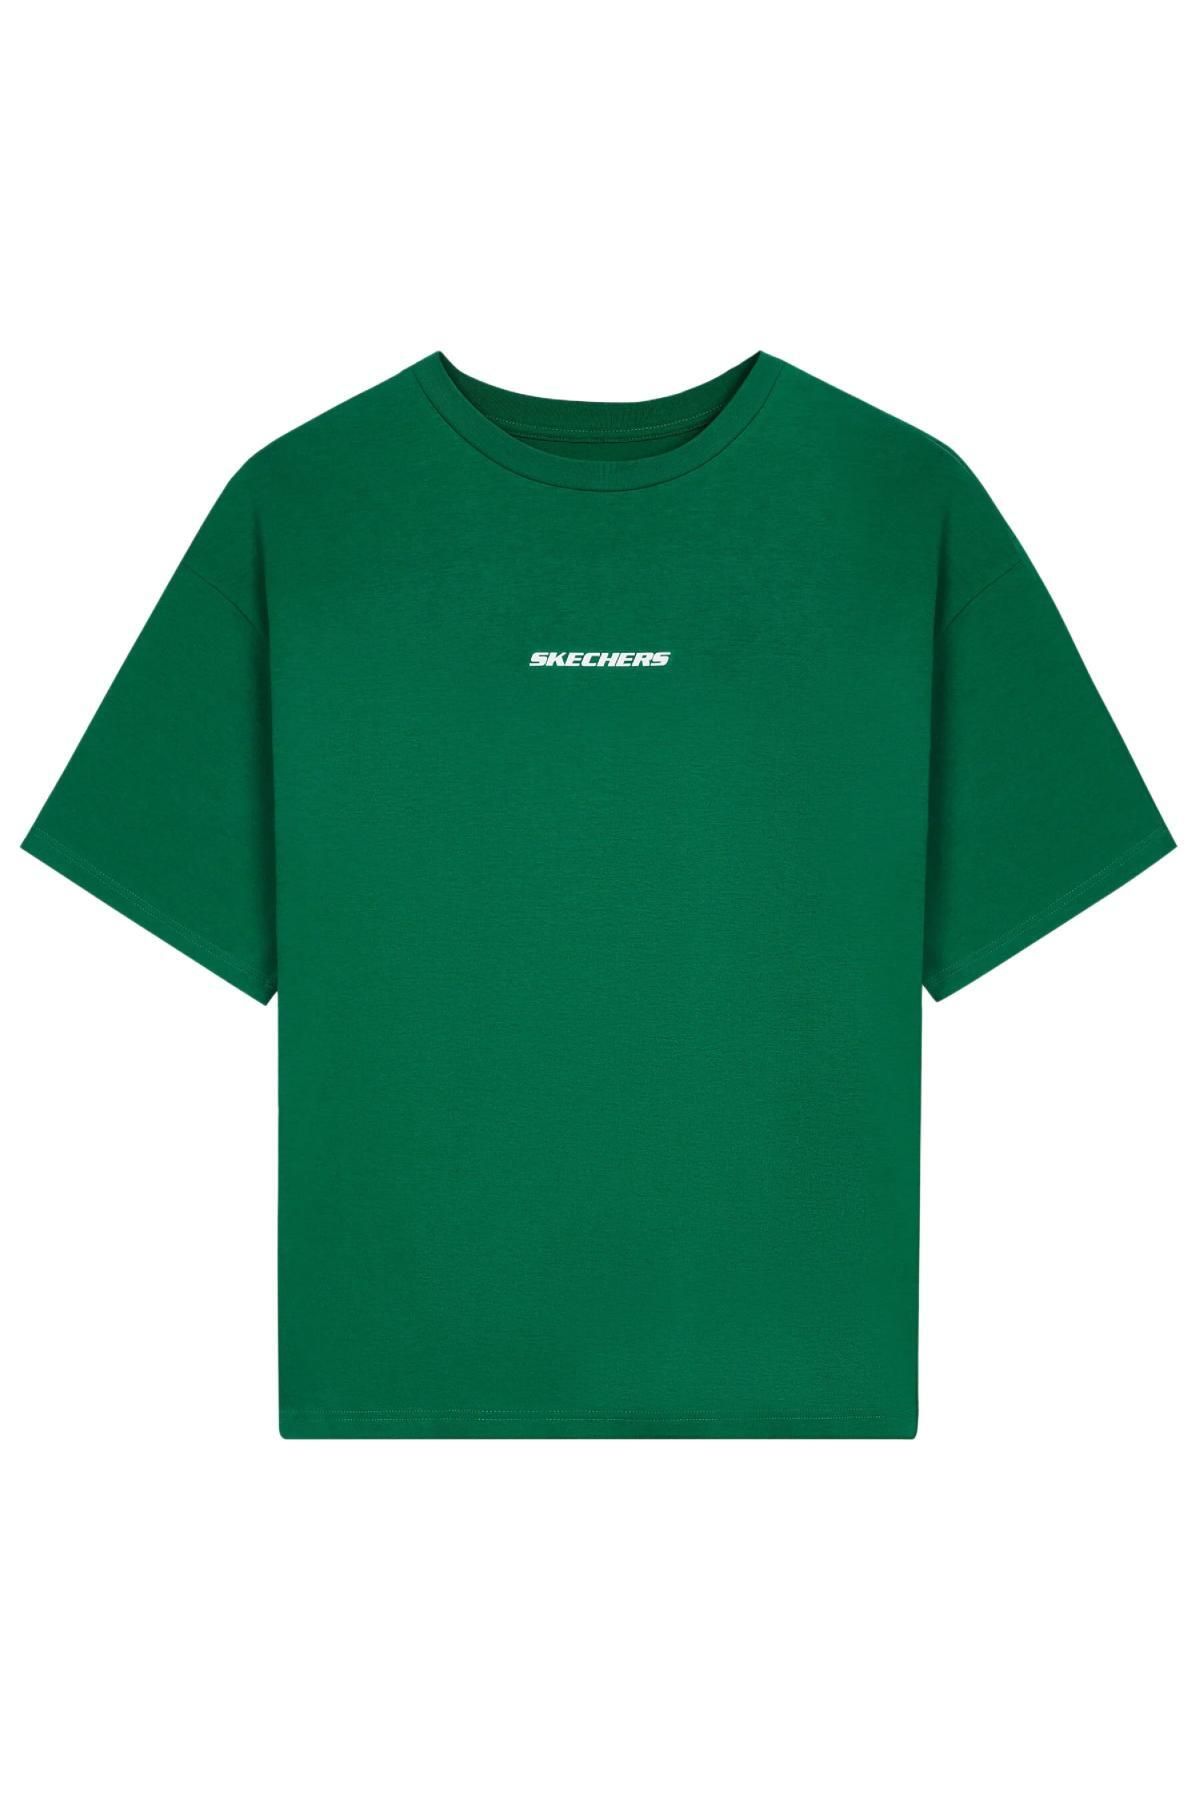 Skechers S232404 M Graphic Tee Oversize Yeşil Erkek T-Shirt